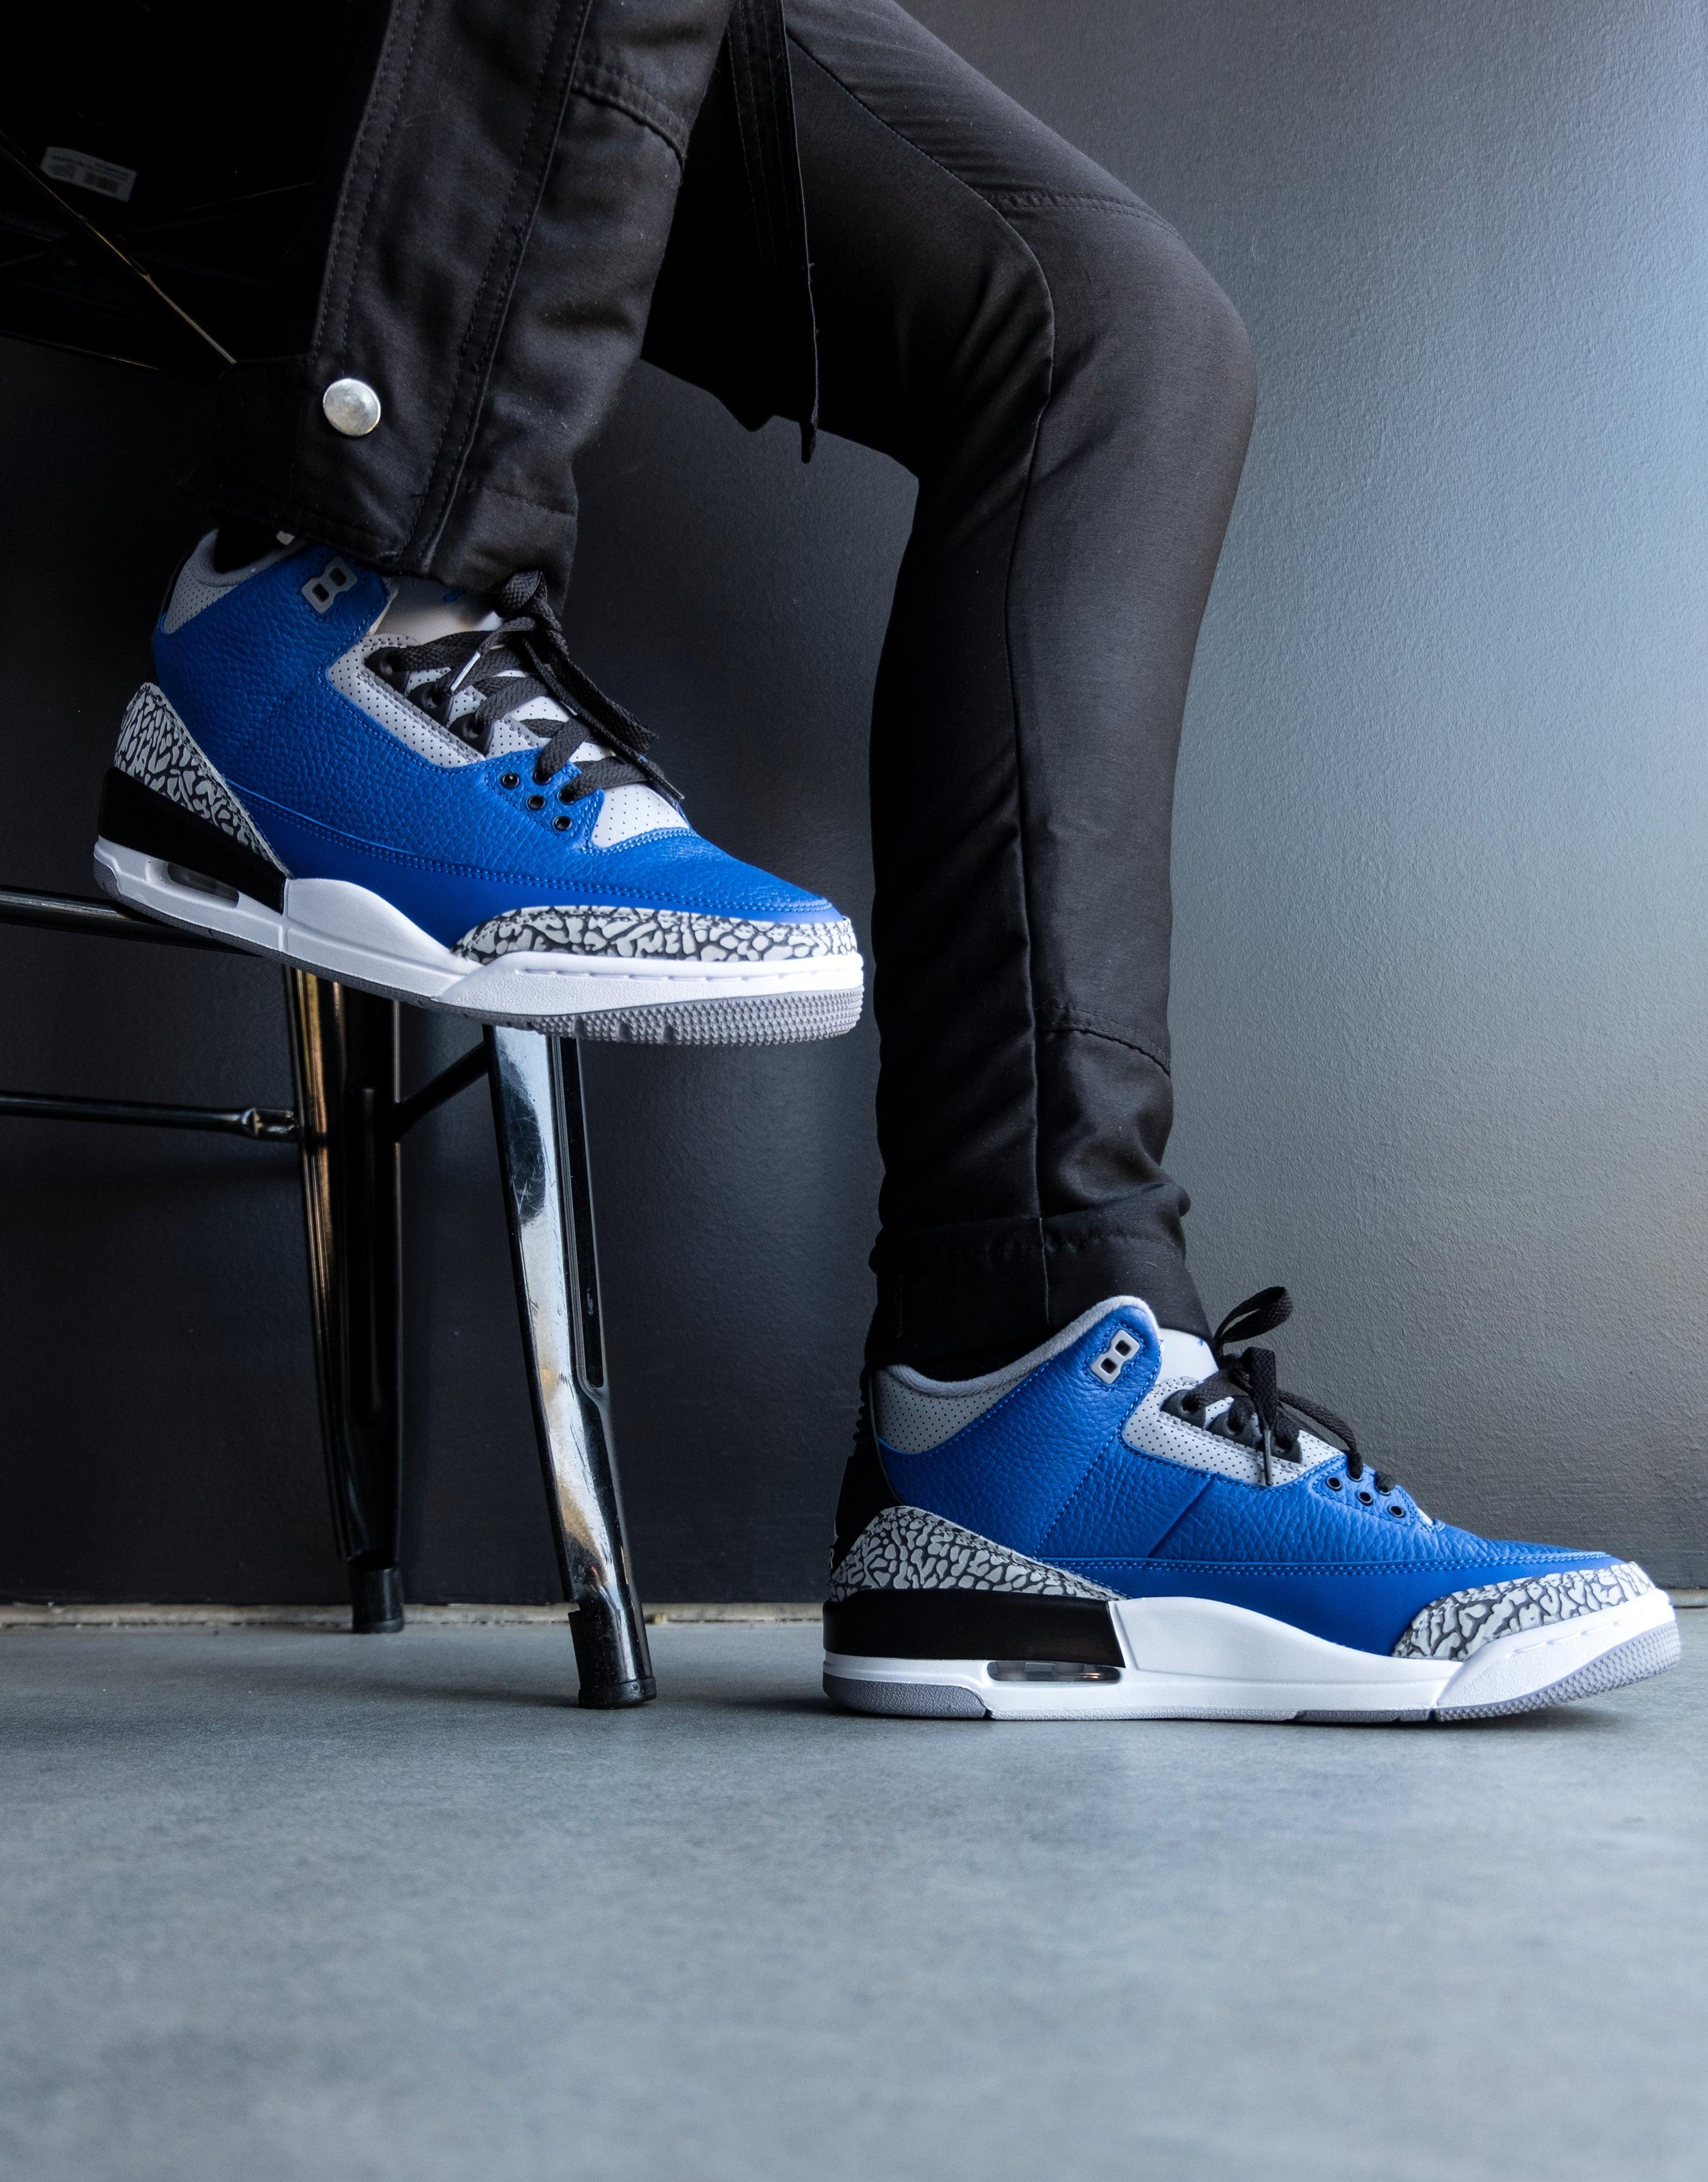 medley Seaport glas Sneakers Release – Jordan 3 Retro “Blue Cement” Varsity Royal/Cement Grey  Men's Basketball Shoe